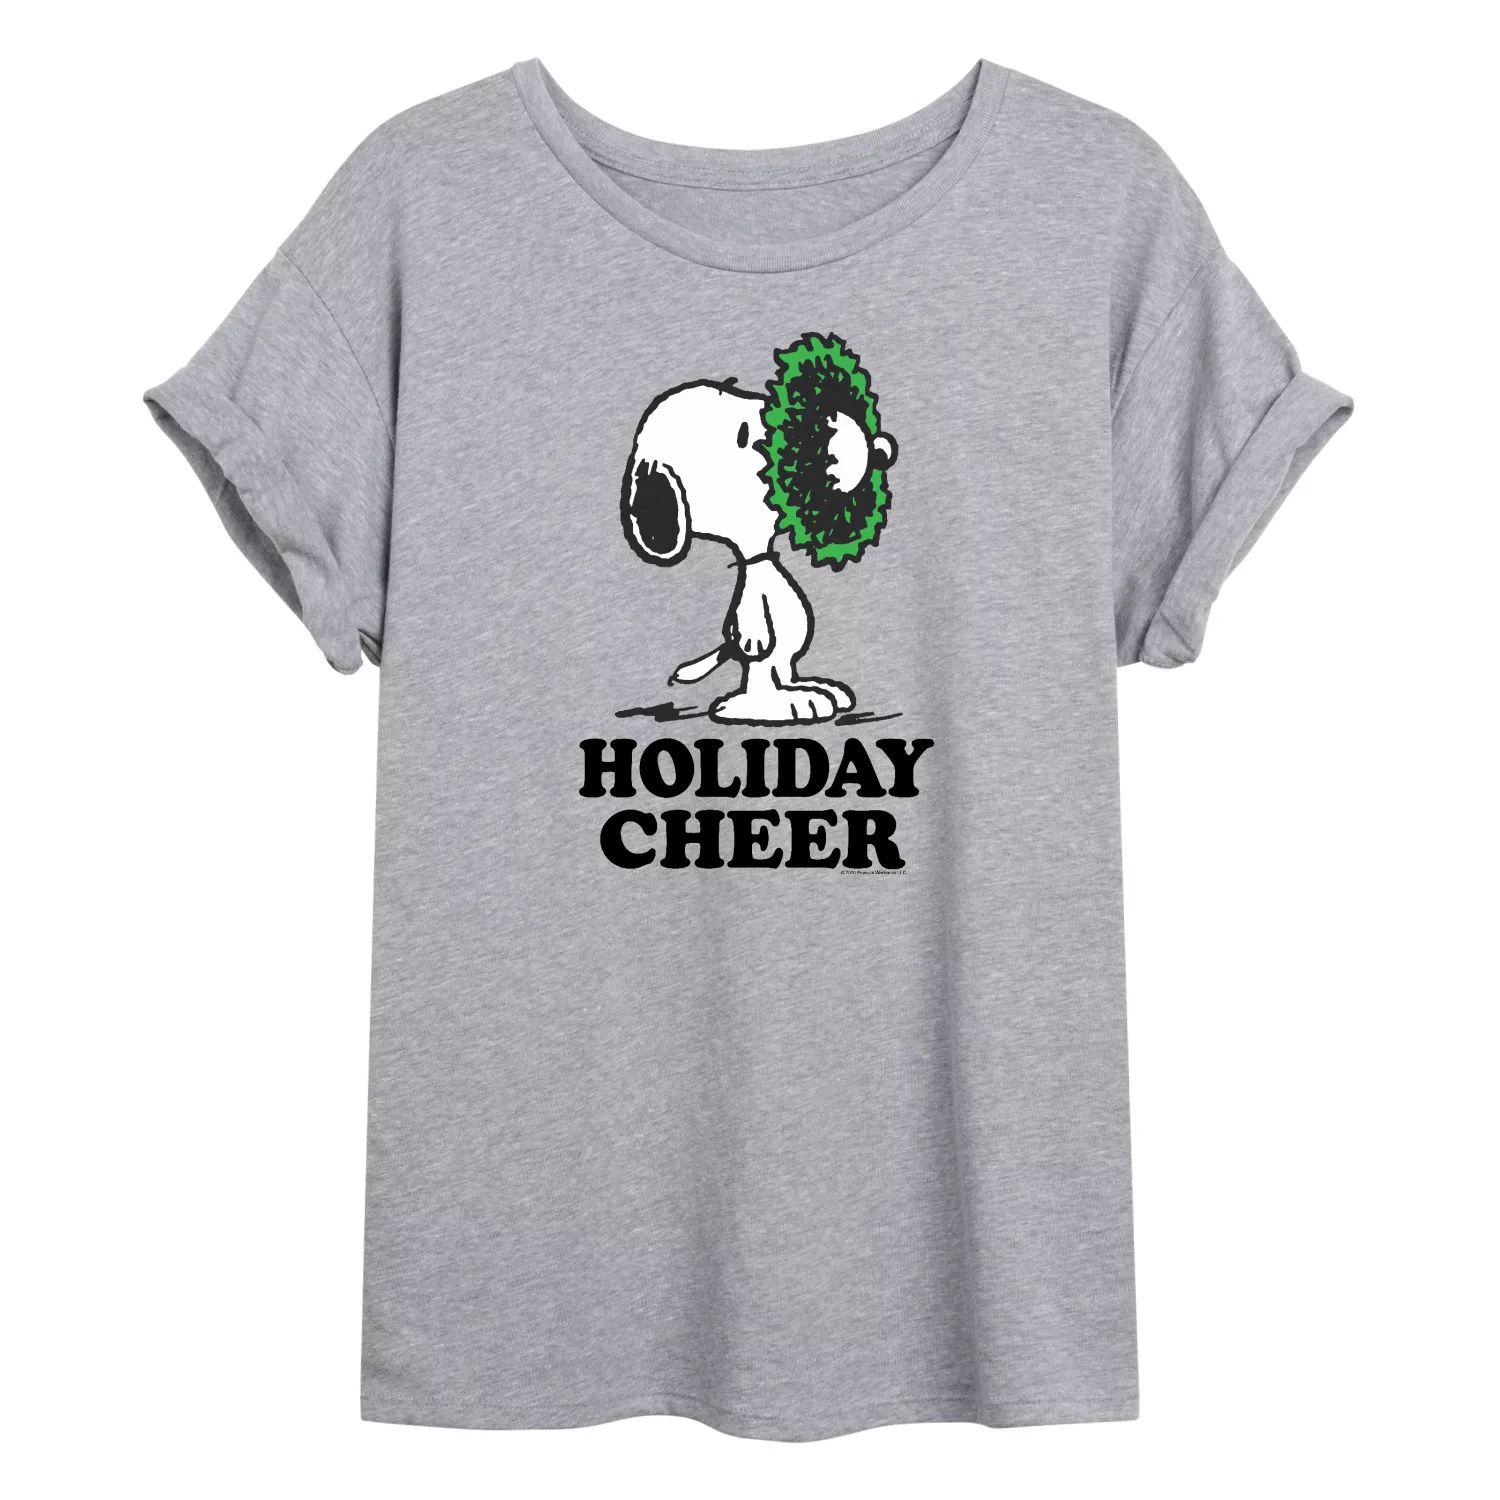 Детская футболка Peanuts Holiday Cheer с струящимся рисунком Licensed Character